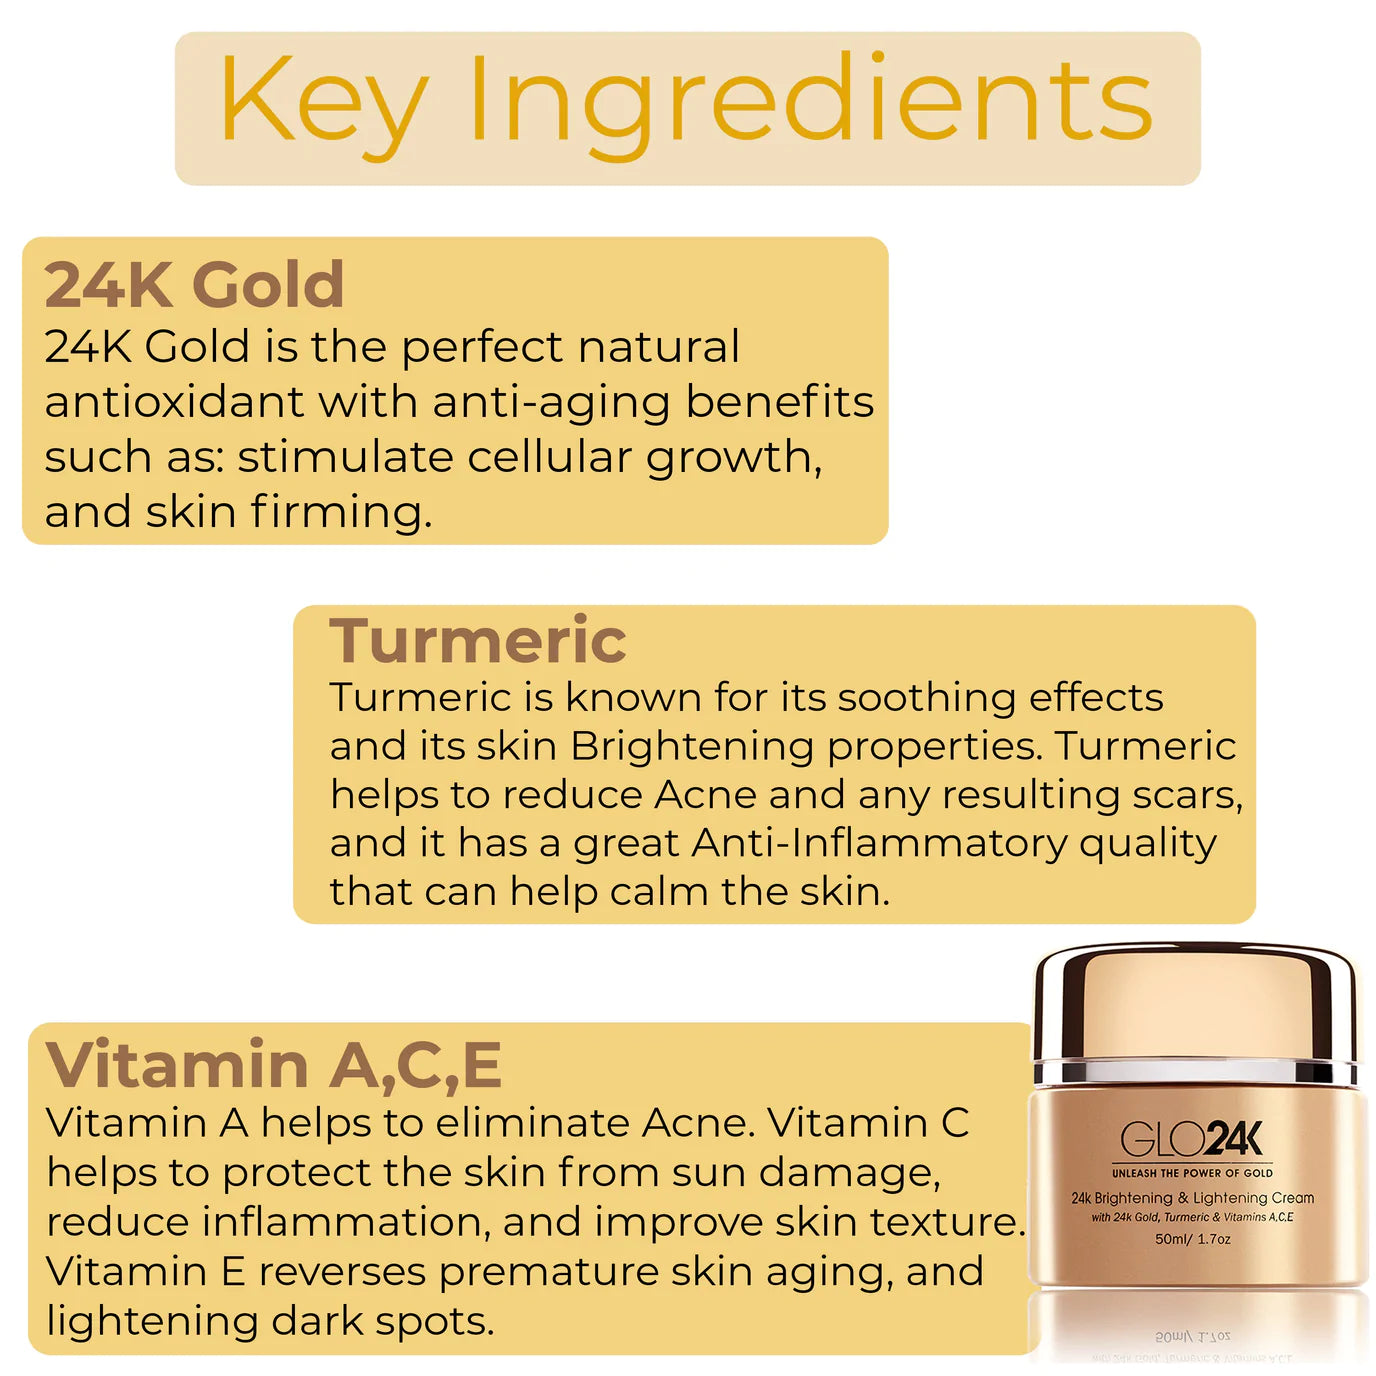 Key ingredients of GLO24K Brightening & Lightening Cream